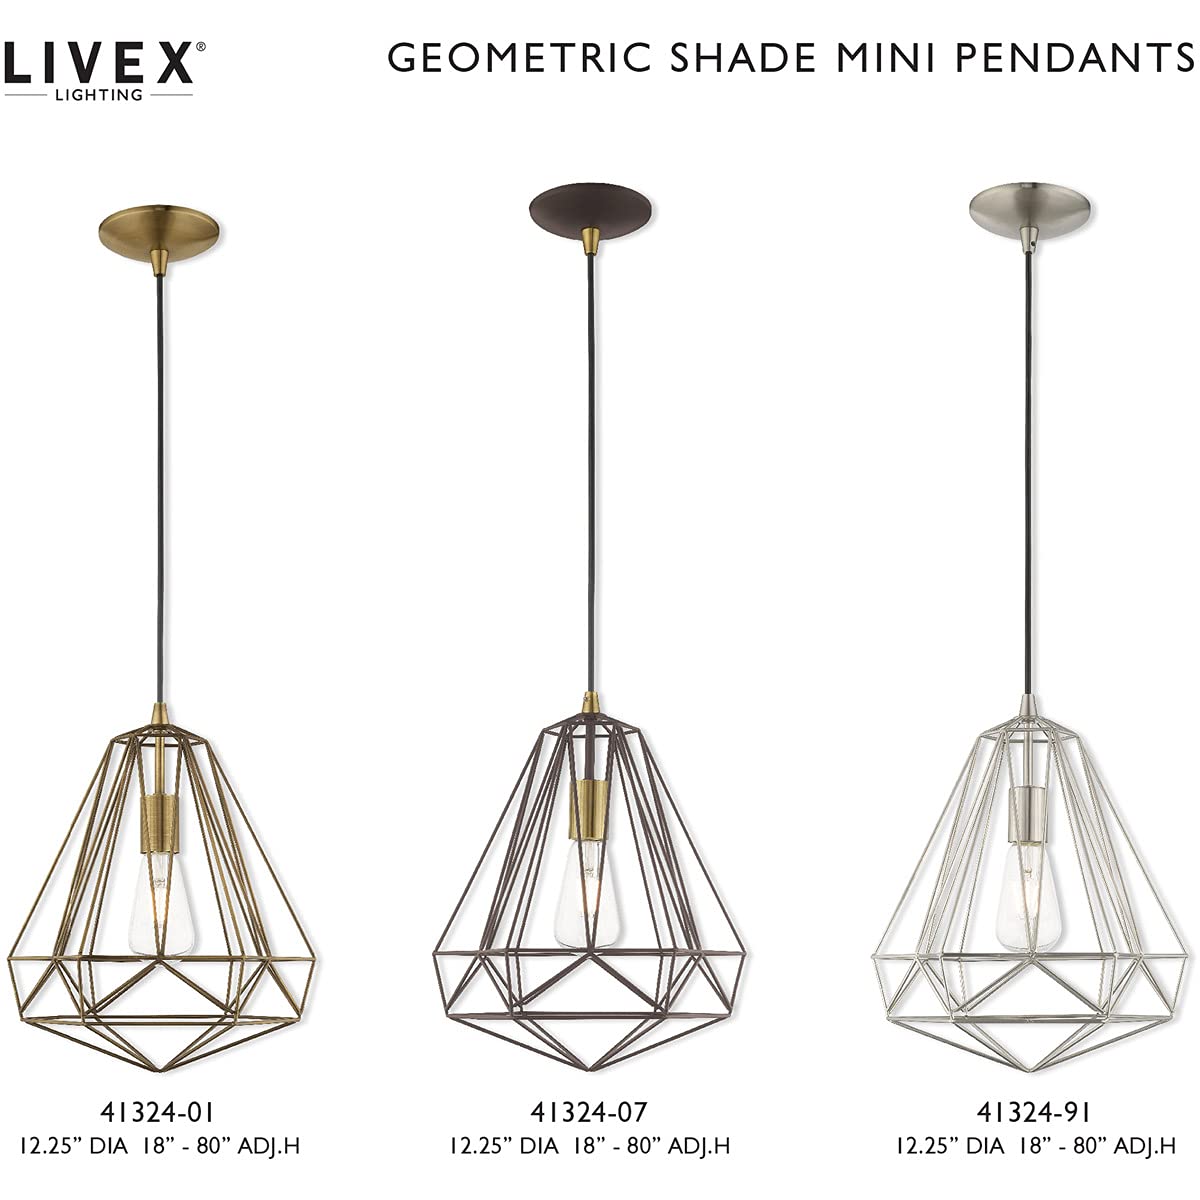 Livex Lighting 41324-07 Geometric Shade - 12.25" One Light Mini Pendant, Bronze Finish with Bronze Metal Shade